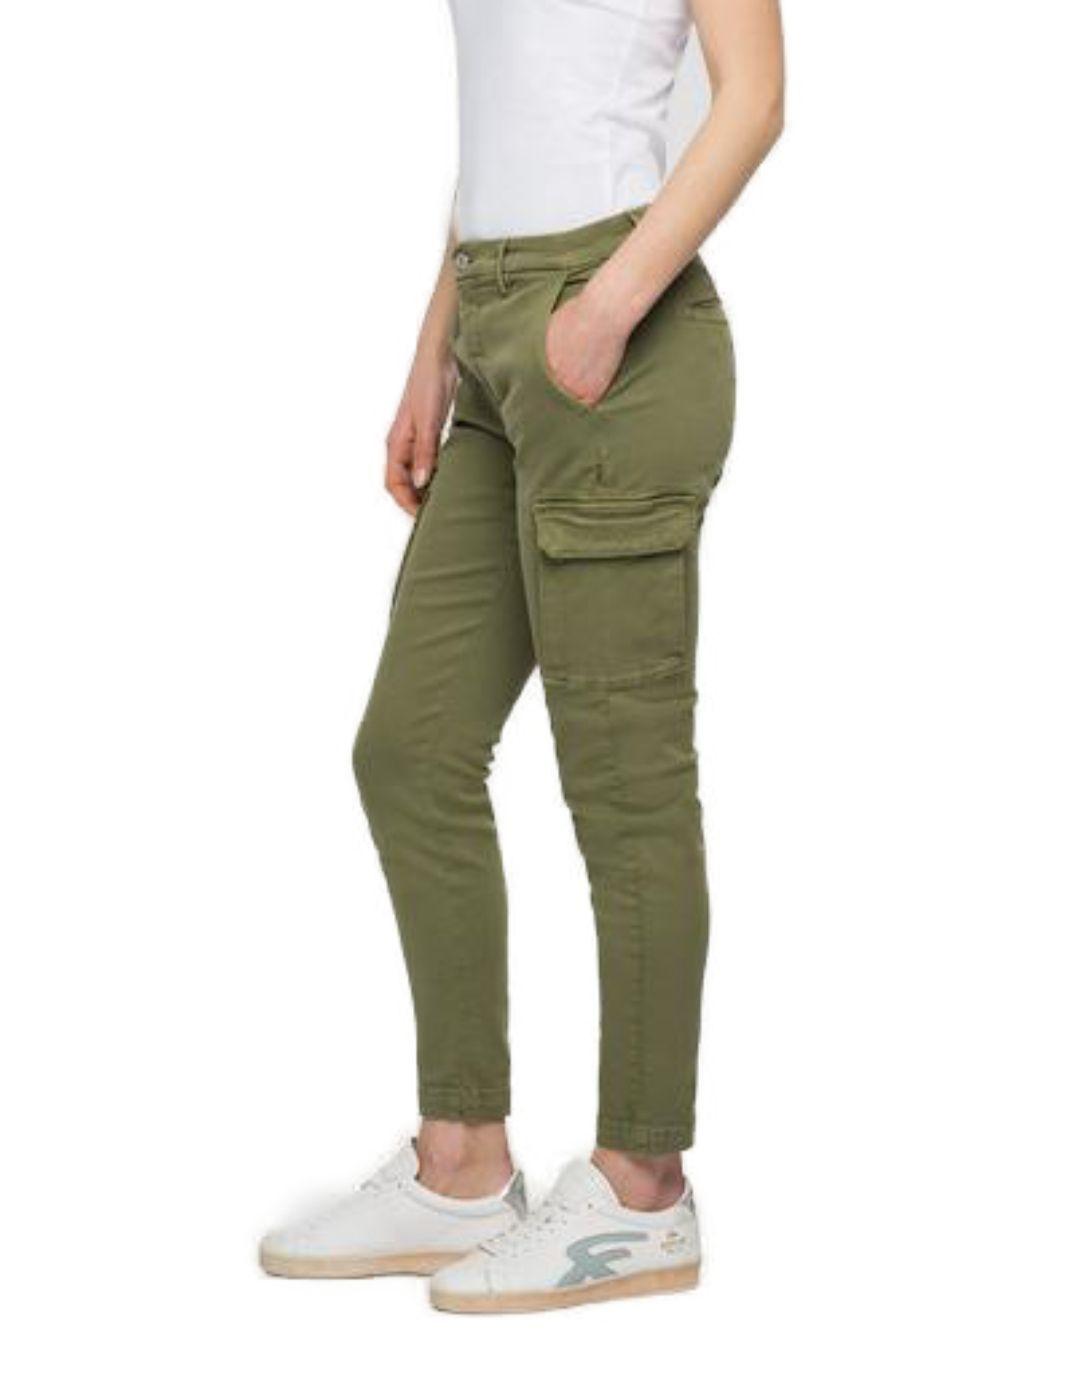 Pantalon Replay cargo verde para mujer -a